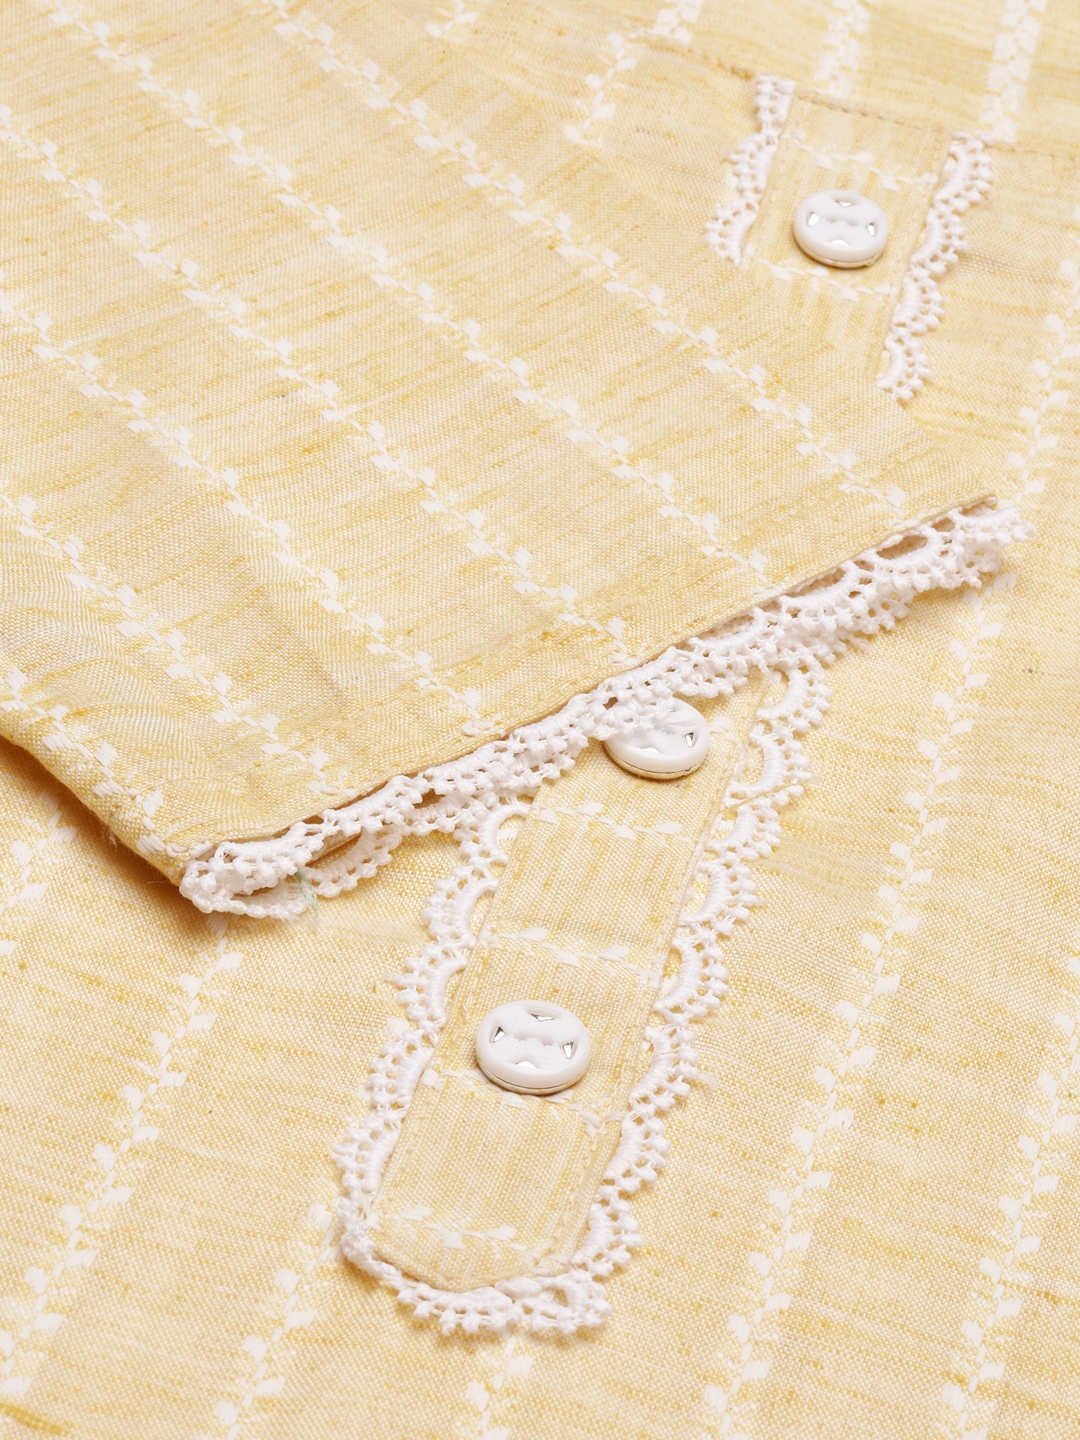 Women's Yellow Cotton Solid Comfort Fit Kurtas